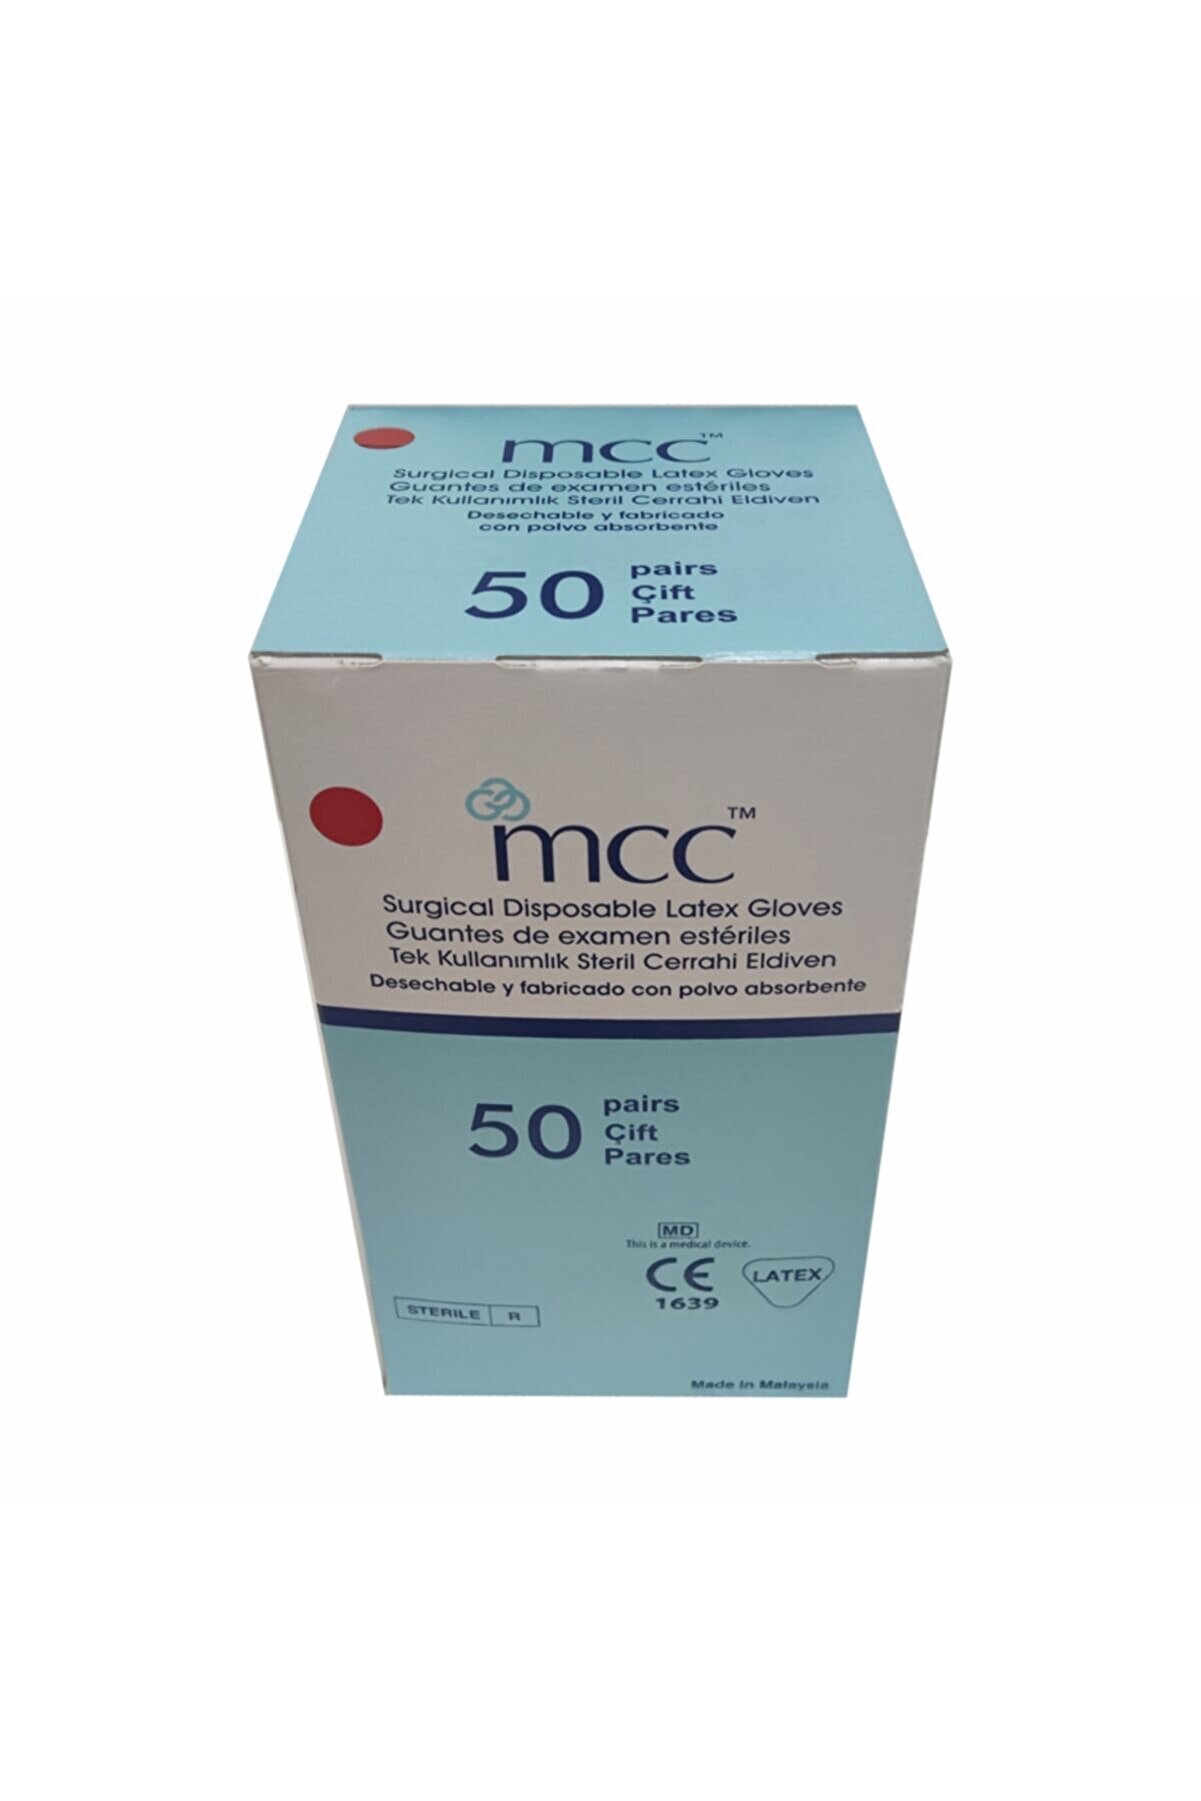 MCC Steril Cerrahi Eldiven Pudralı - 50 Çift ( 8 - Numara )